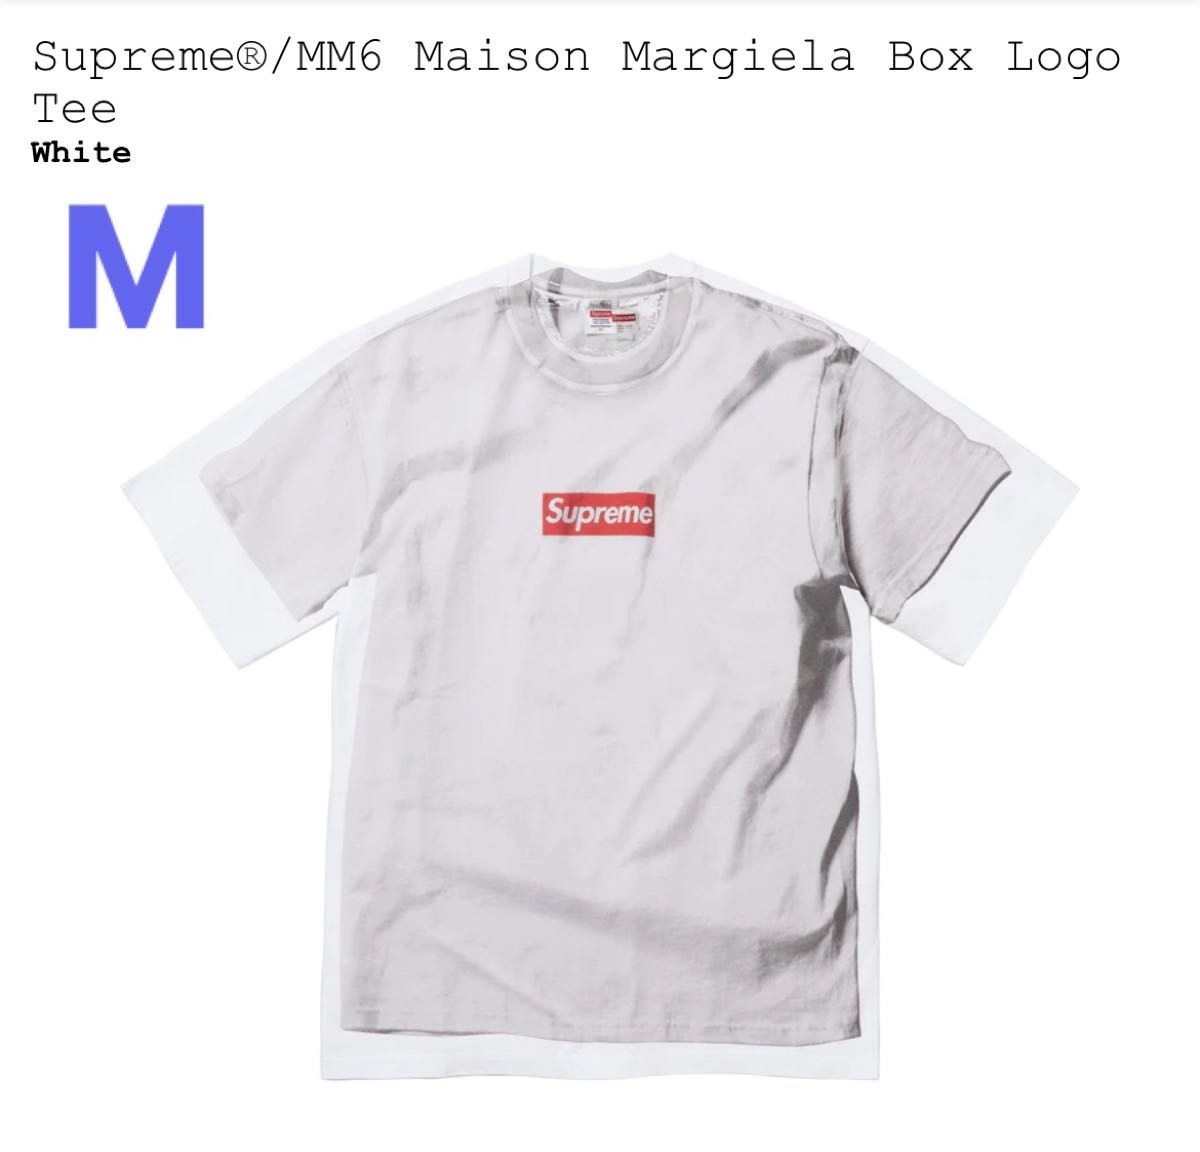 Supreme MM6 Maison Margiela Box Logo Tee ボックスロゴ Tシャツ